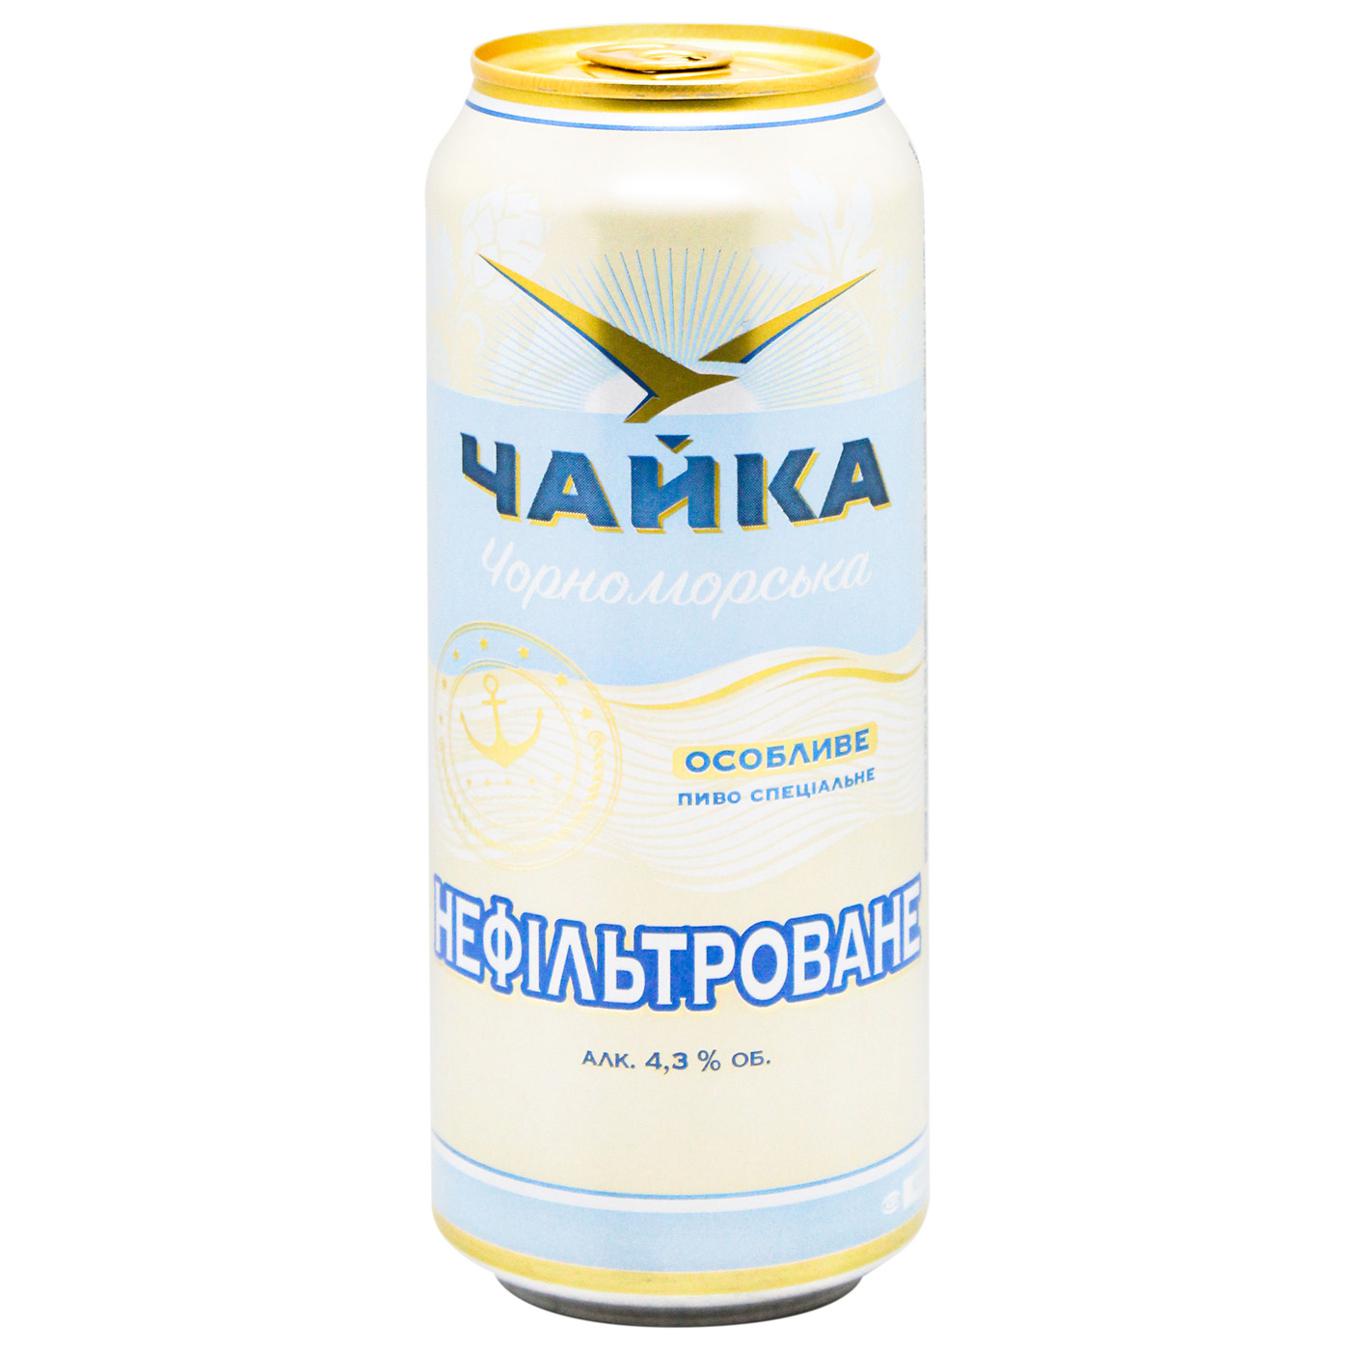 Beer Chaika Chornomorska light unfiltered 4.8% 0.5 l iron can